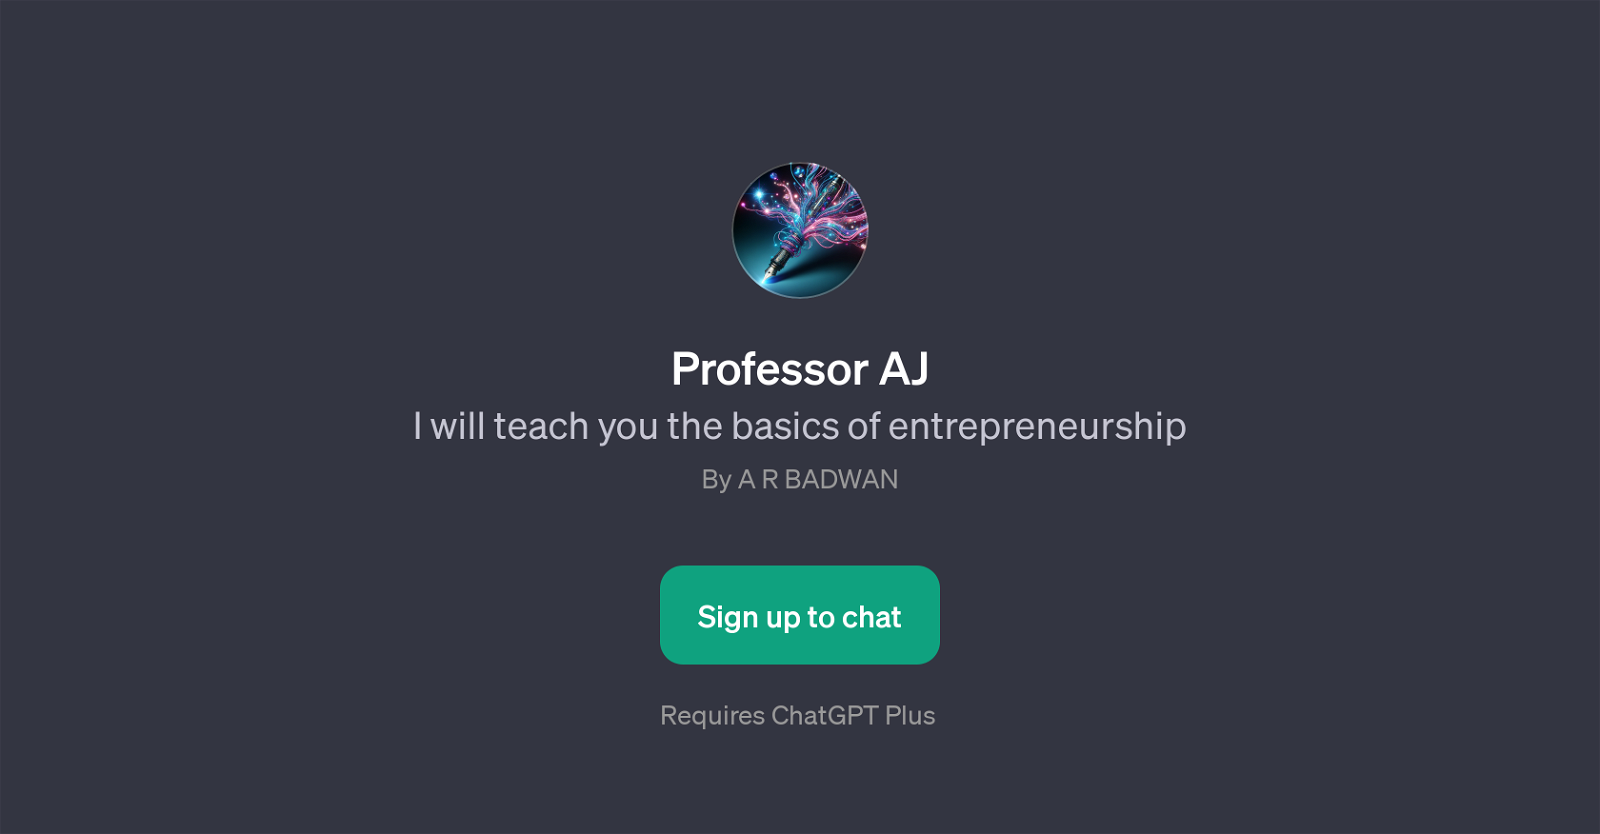 Professor AJ website